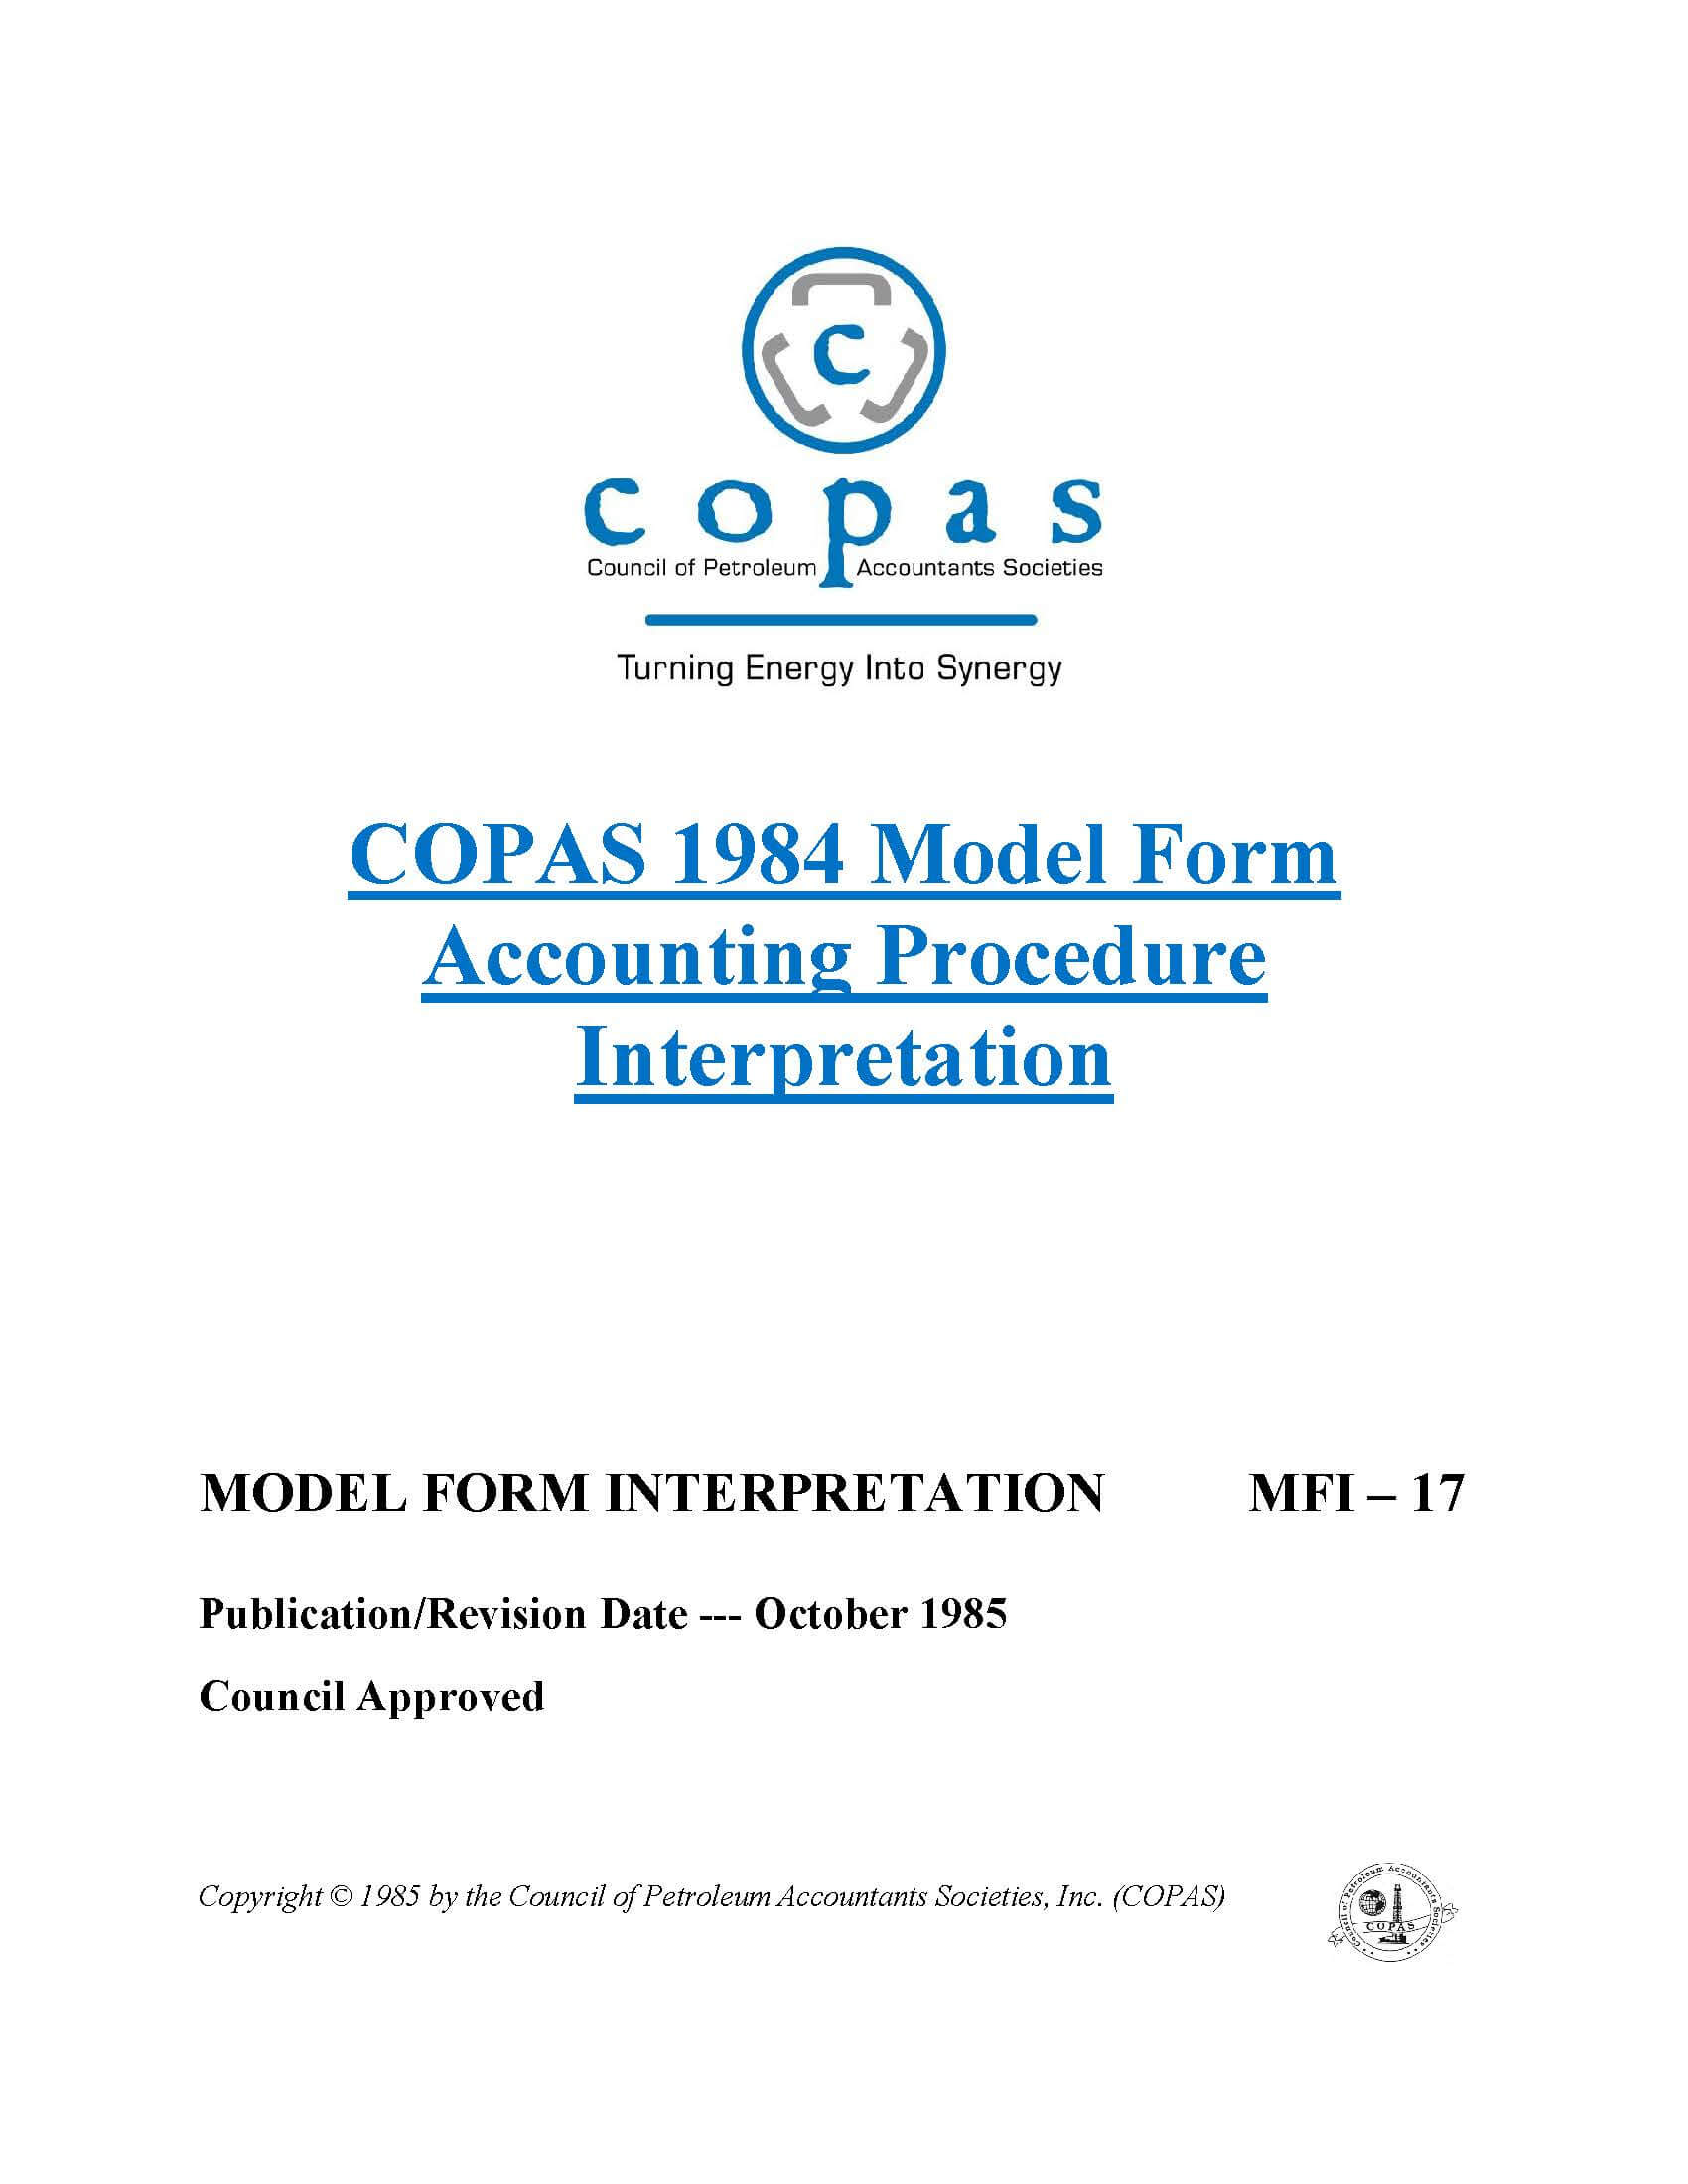 MFI-17 1984 Model Form Accounting Procedure Interpretation